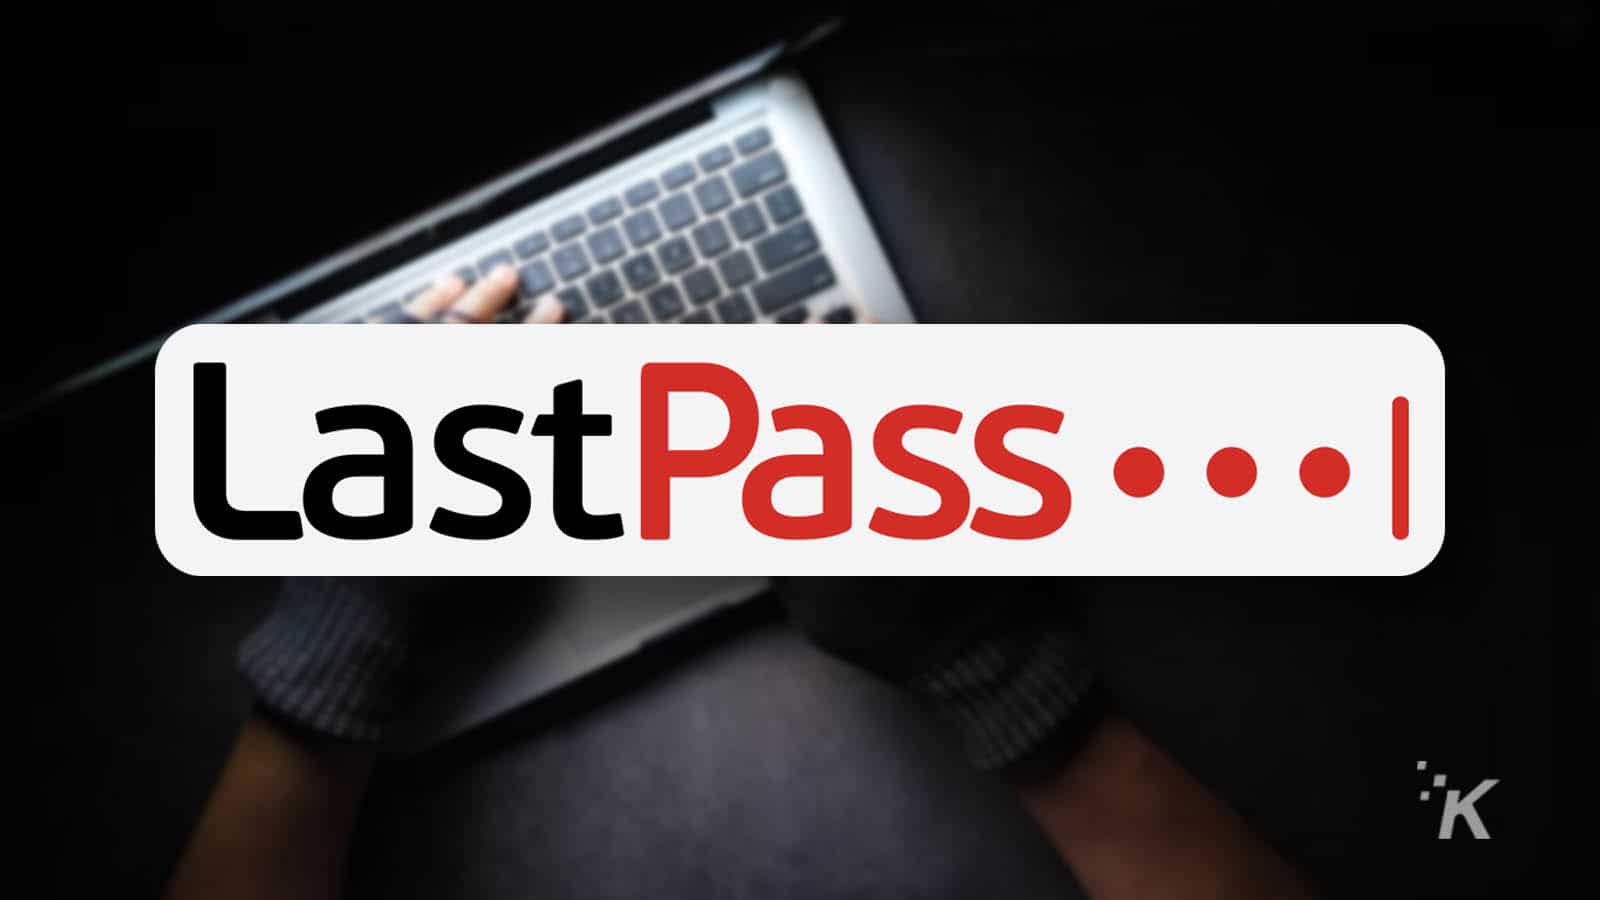 lastpass logo on blurred background